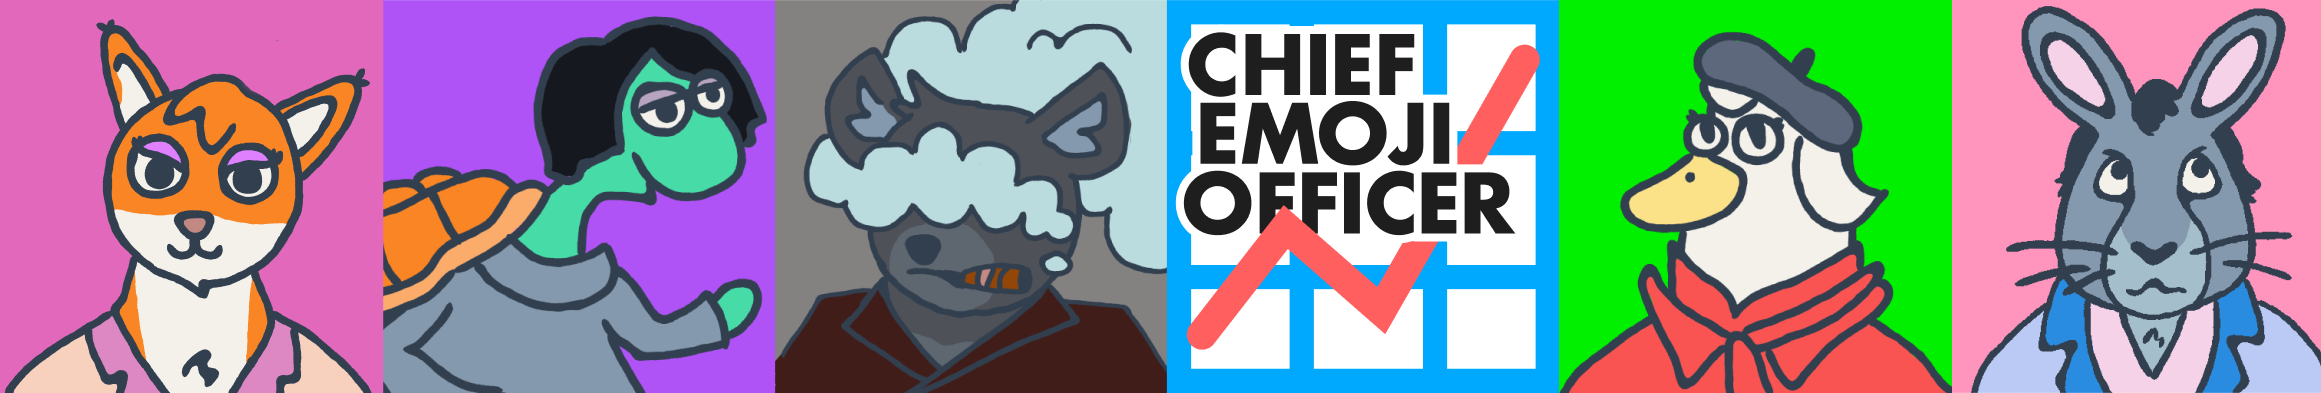 Chief Emoji Officer header